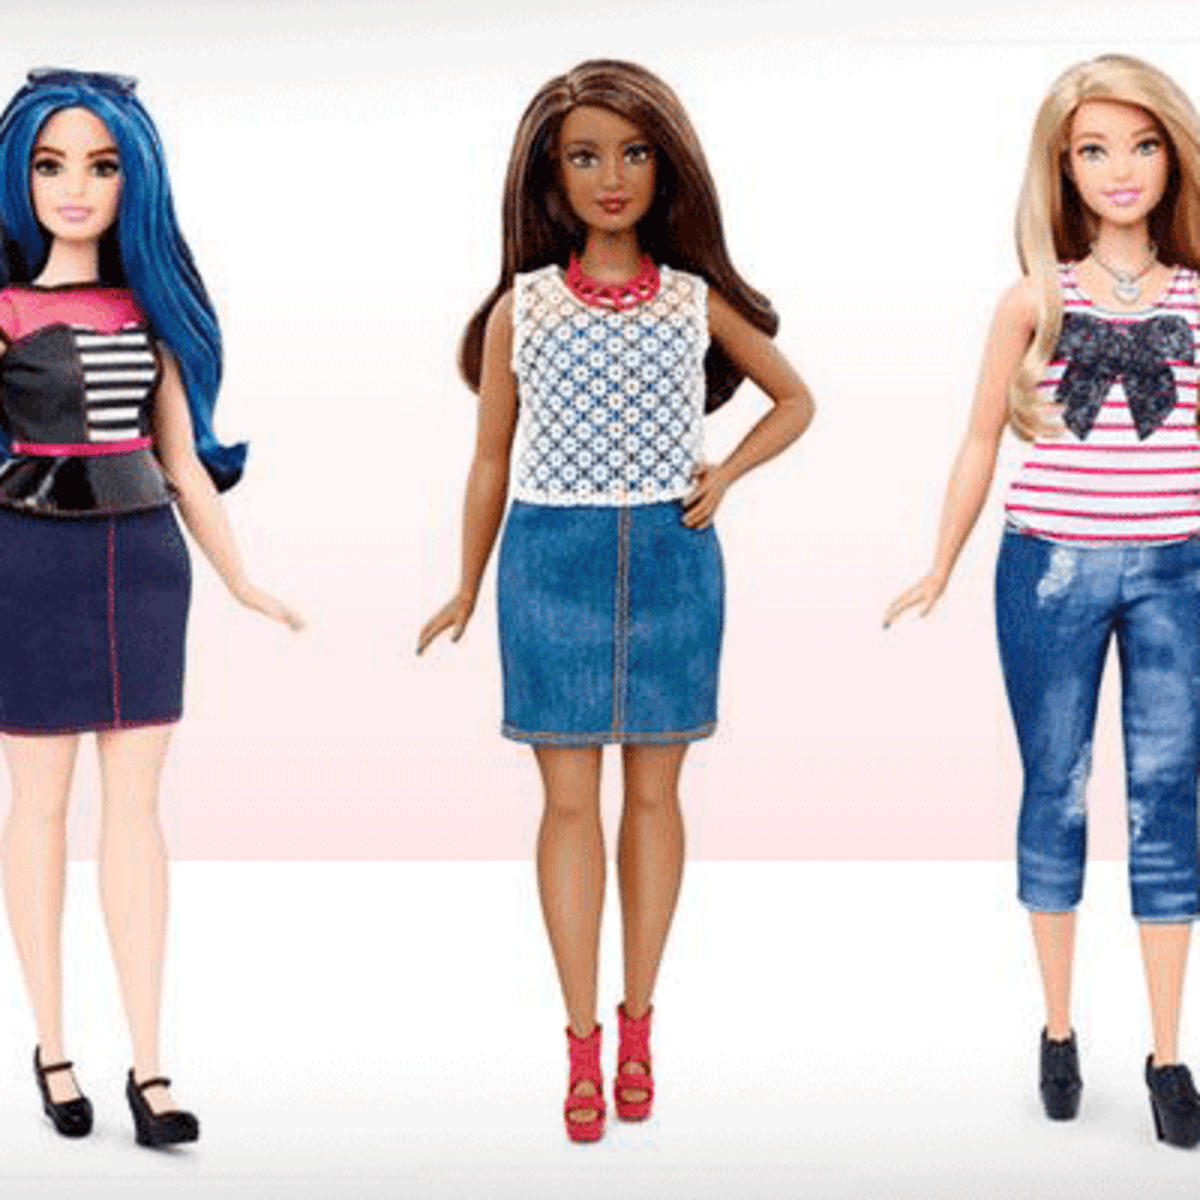 Recensent samen interferentie Mattel's Plus Size Barbie Steps Out, Sales Gains Expected - TheStreet